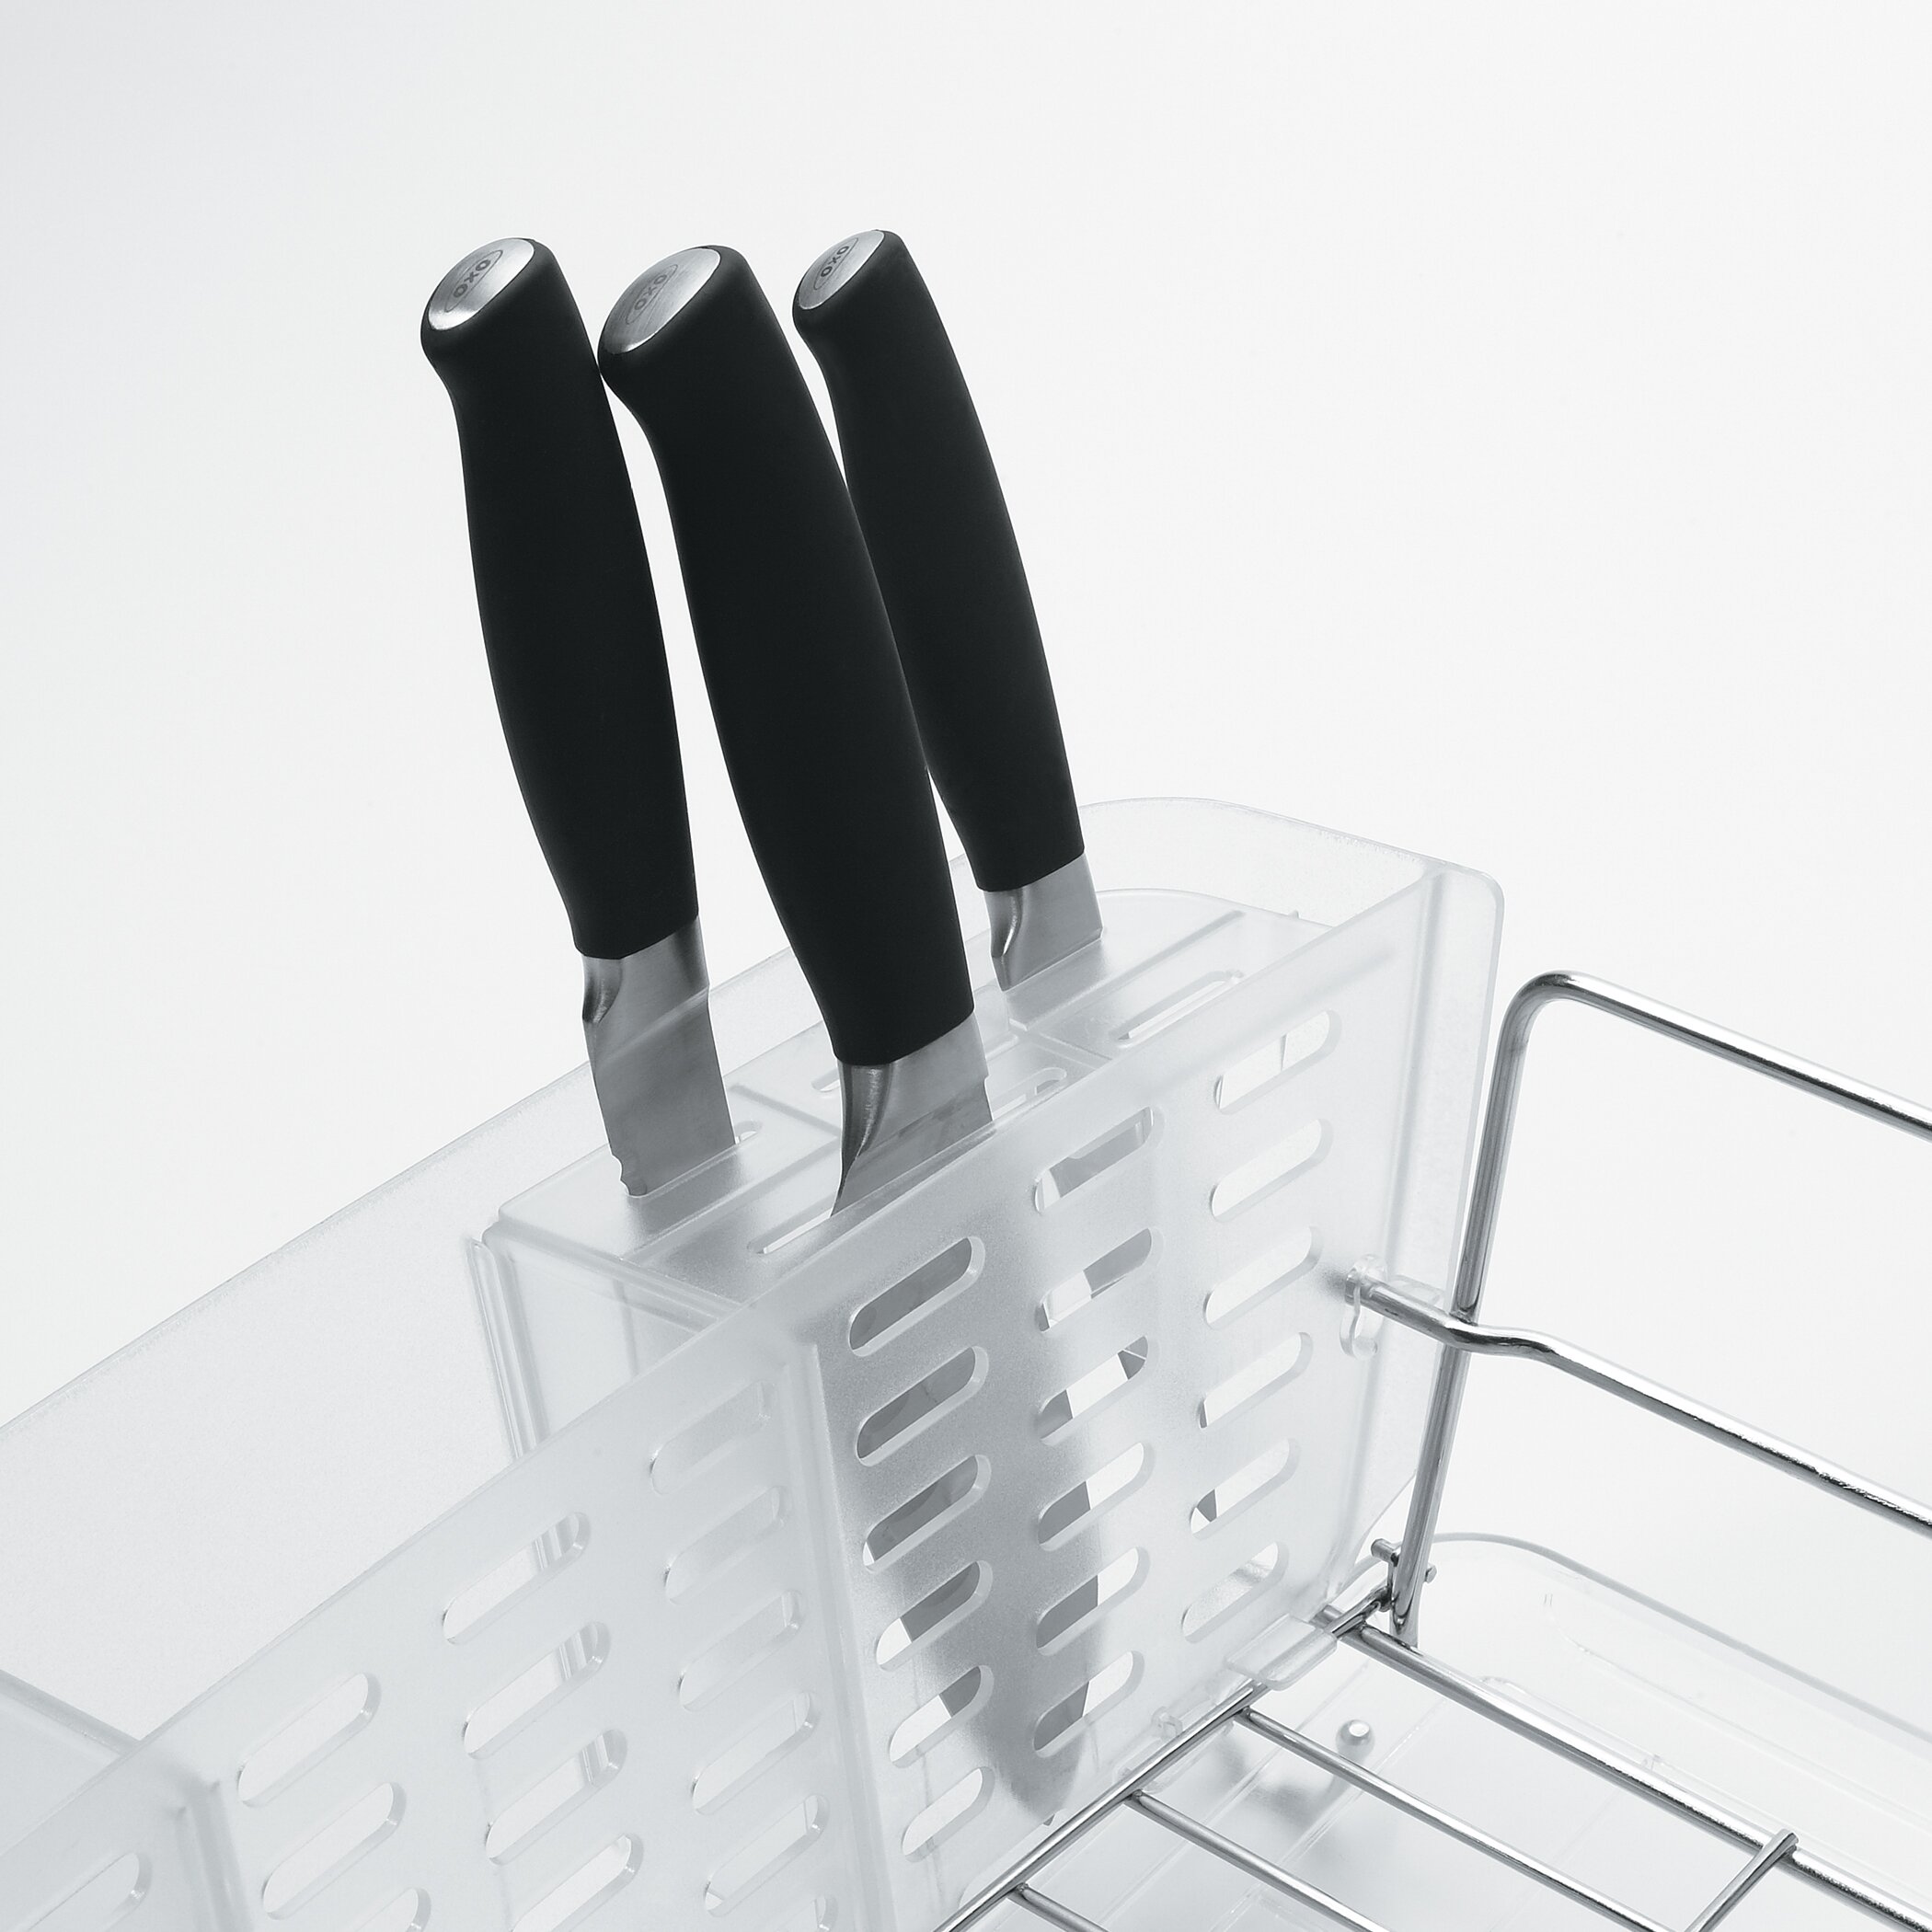 OXO Good Grip Folding Stainless Steel Dish Rack & Reviews | Wayfair Oxo Dish Rack Folding Stainless Steel